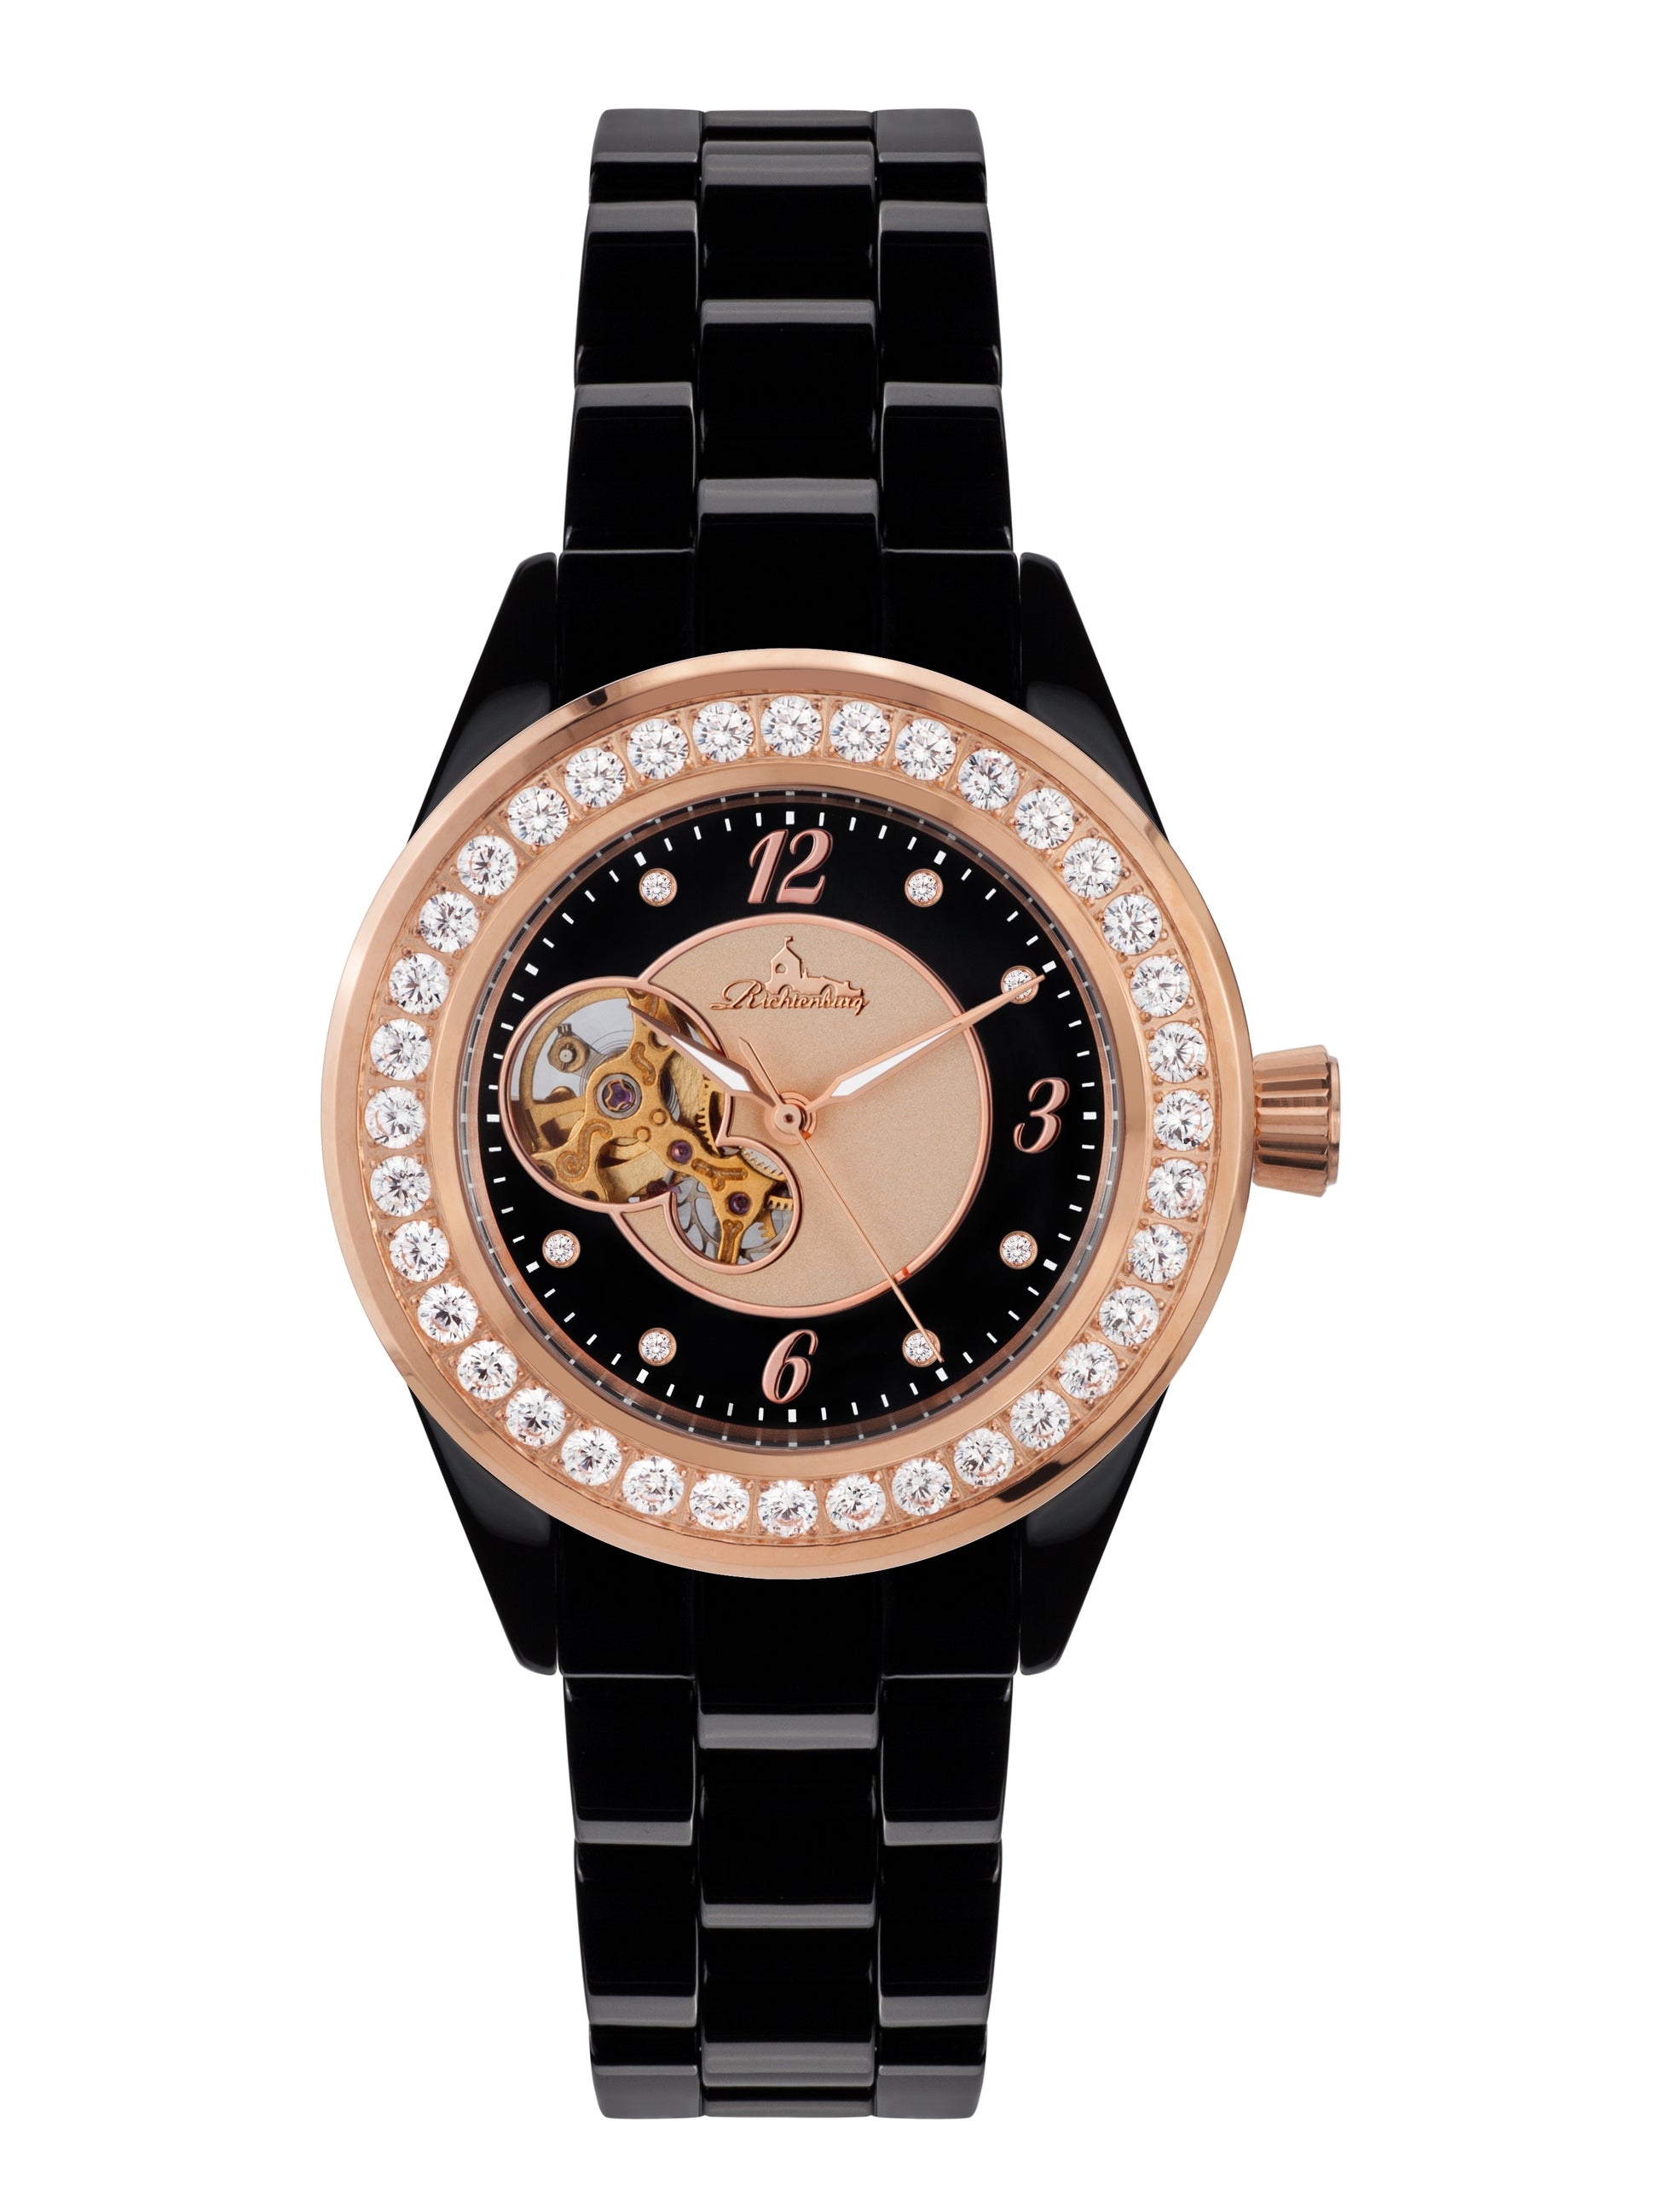 Automatic watches — Venedig Kera — Richtenburg — rosegold IP black